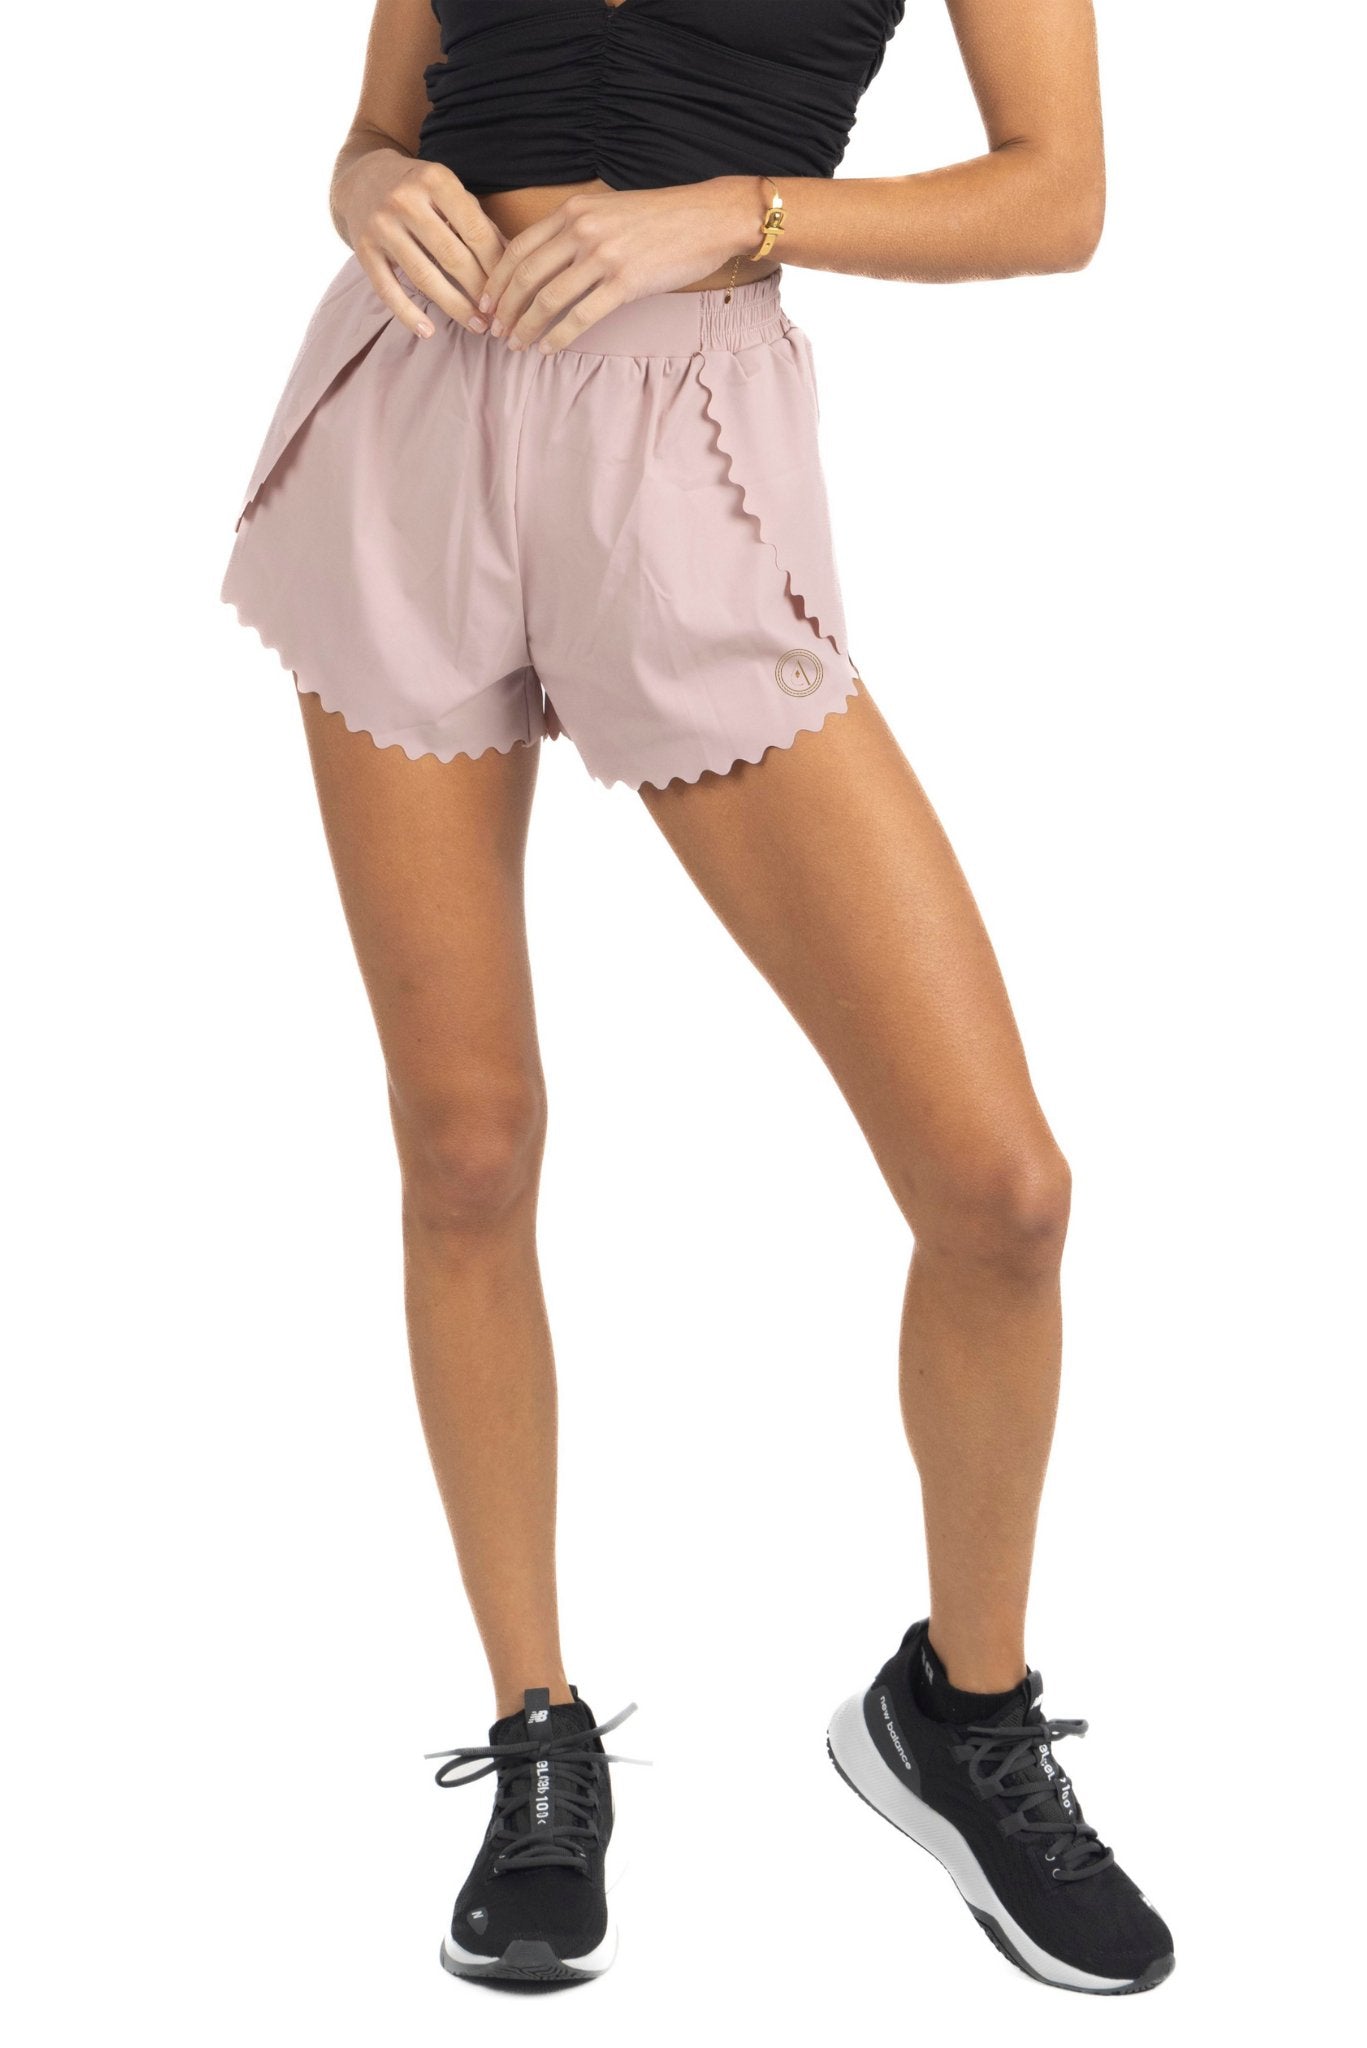 Chloe Romantic Scalloped Detailing Shorts in Soft Pink - Akalia